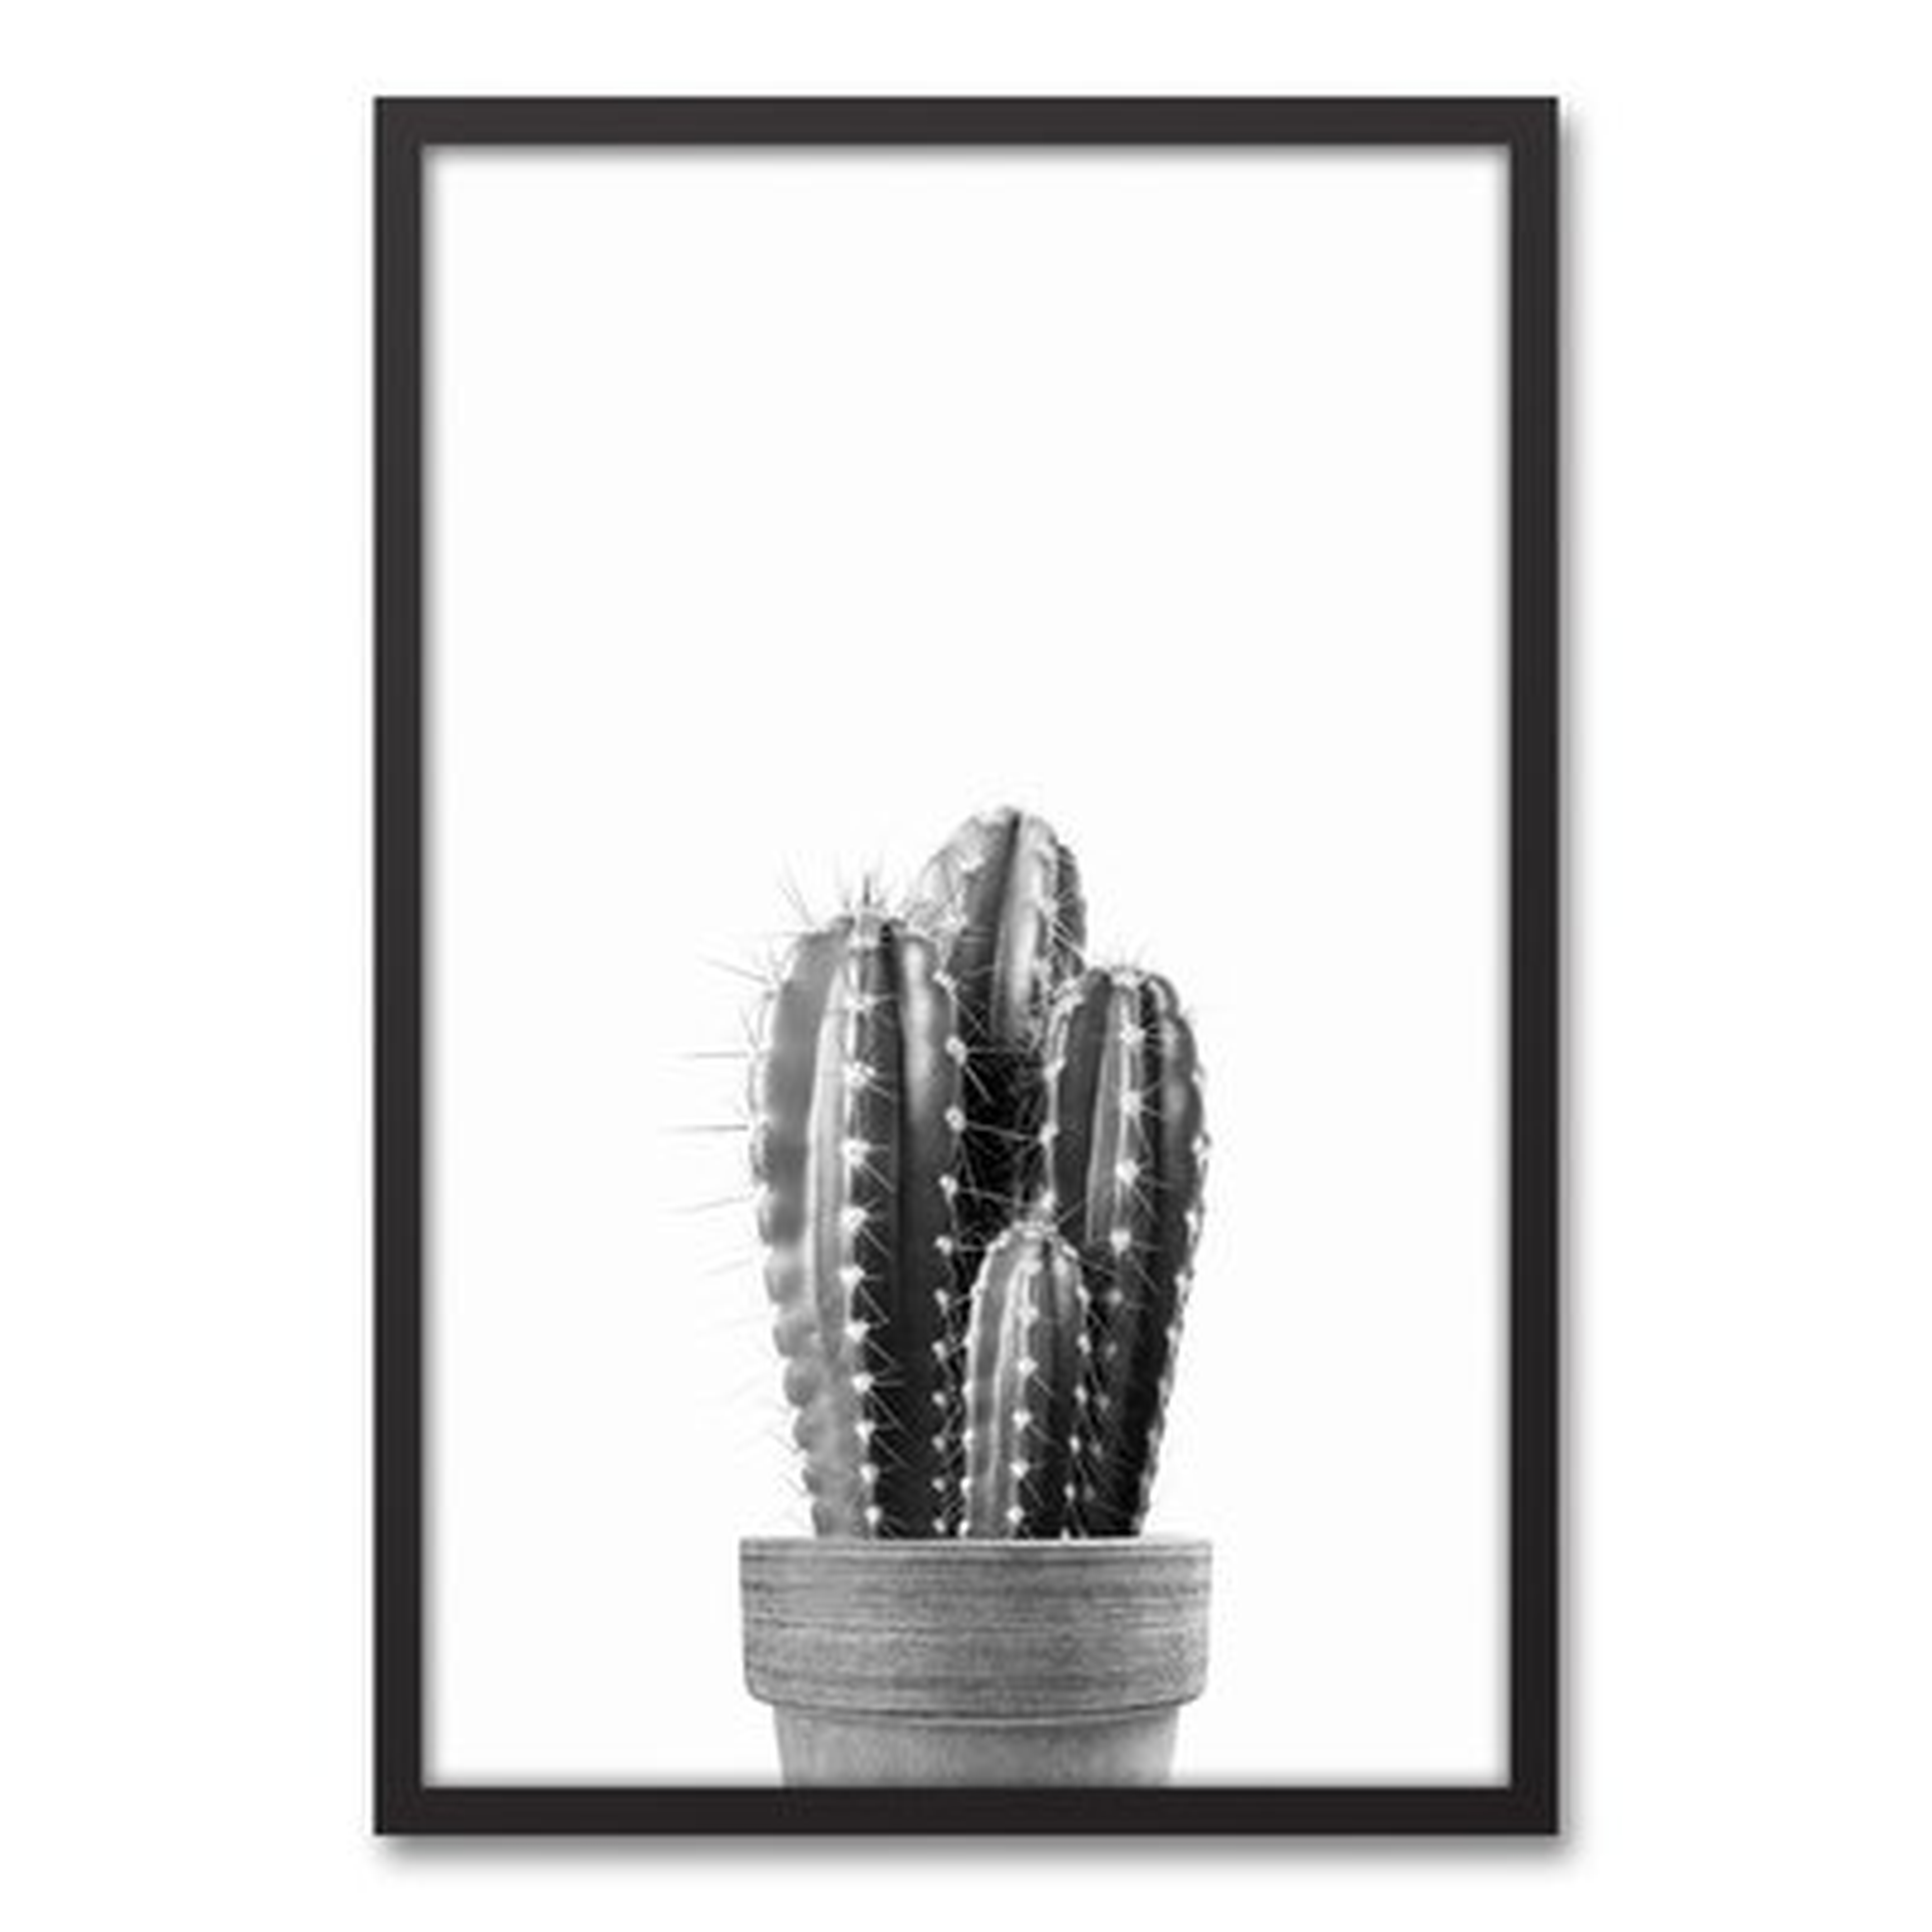 'Black And White Vintage Cactus' Framed Photograph On Canvas - Wayfair